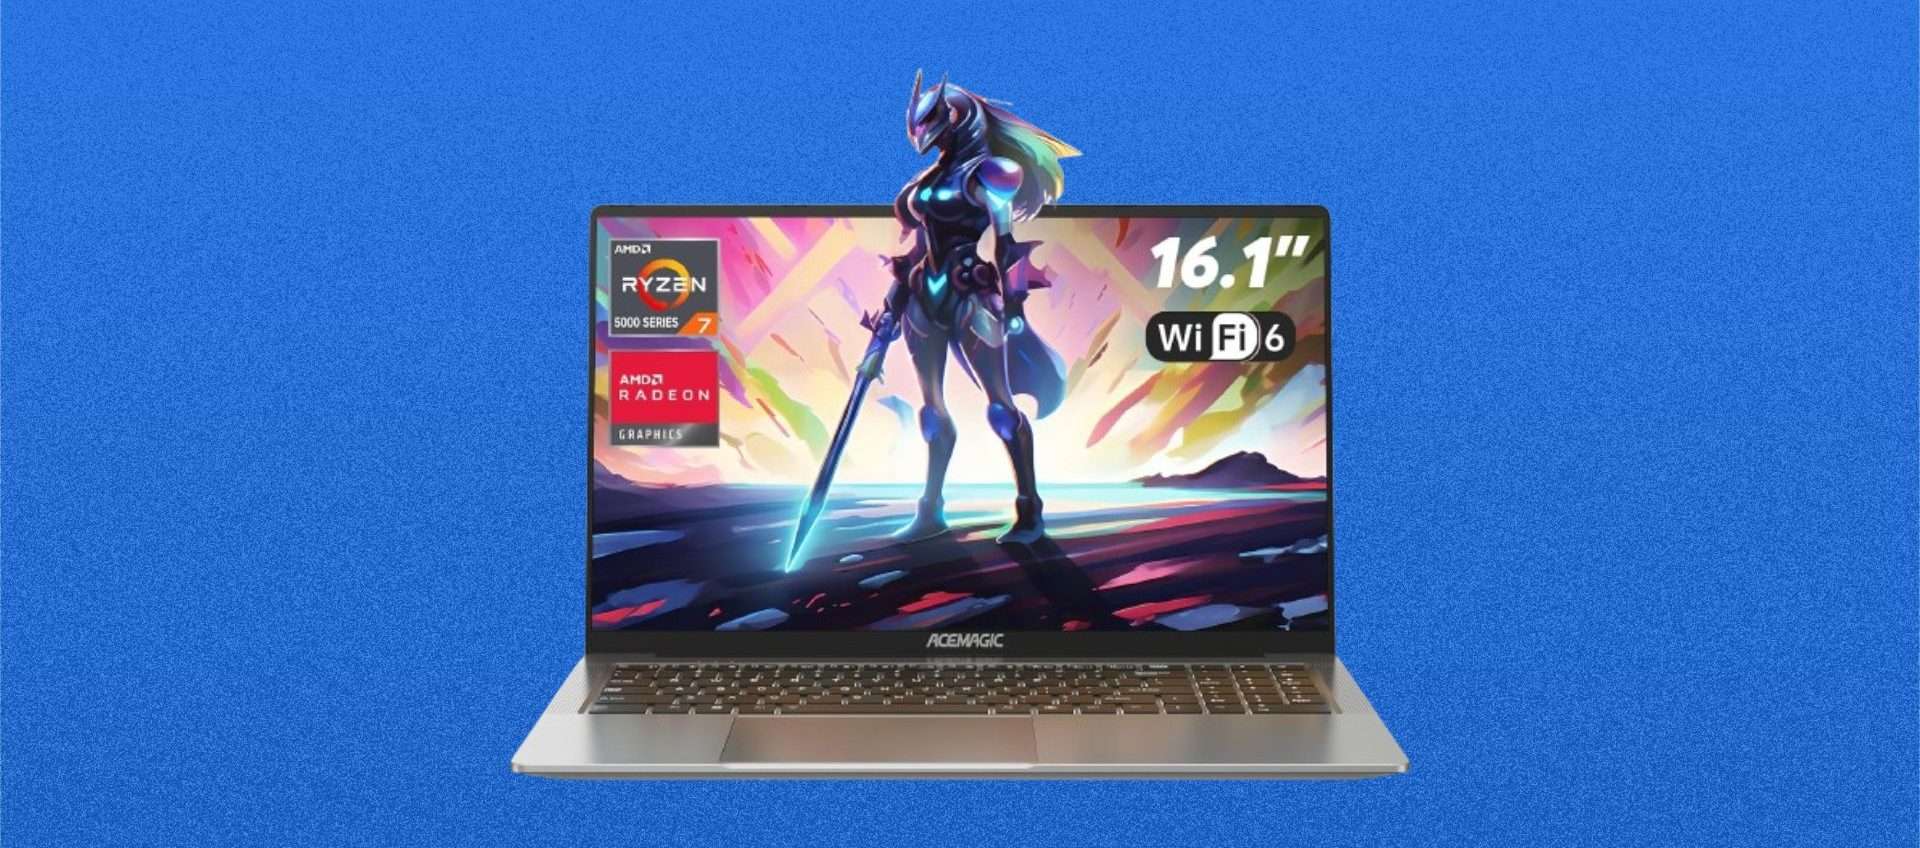 Acemagic AX16PRO: laptop da gaming in offerta, tuo ad appena 541€